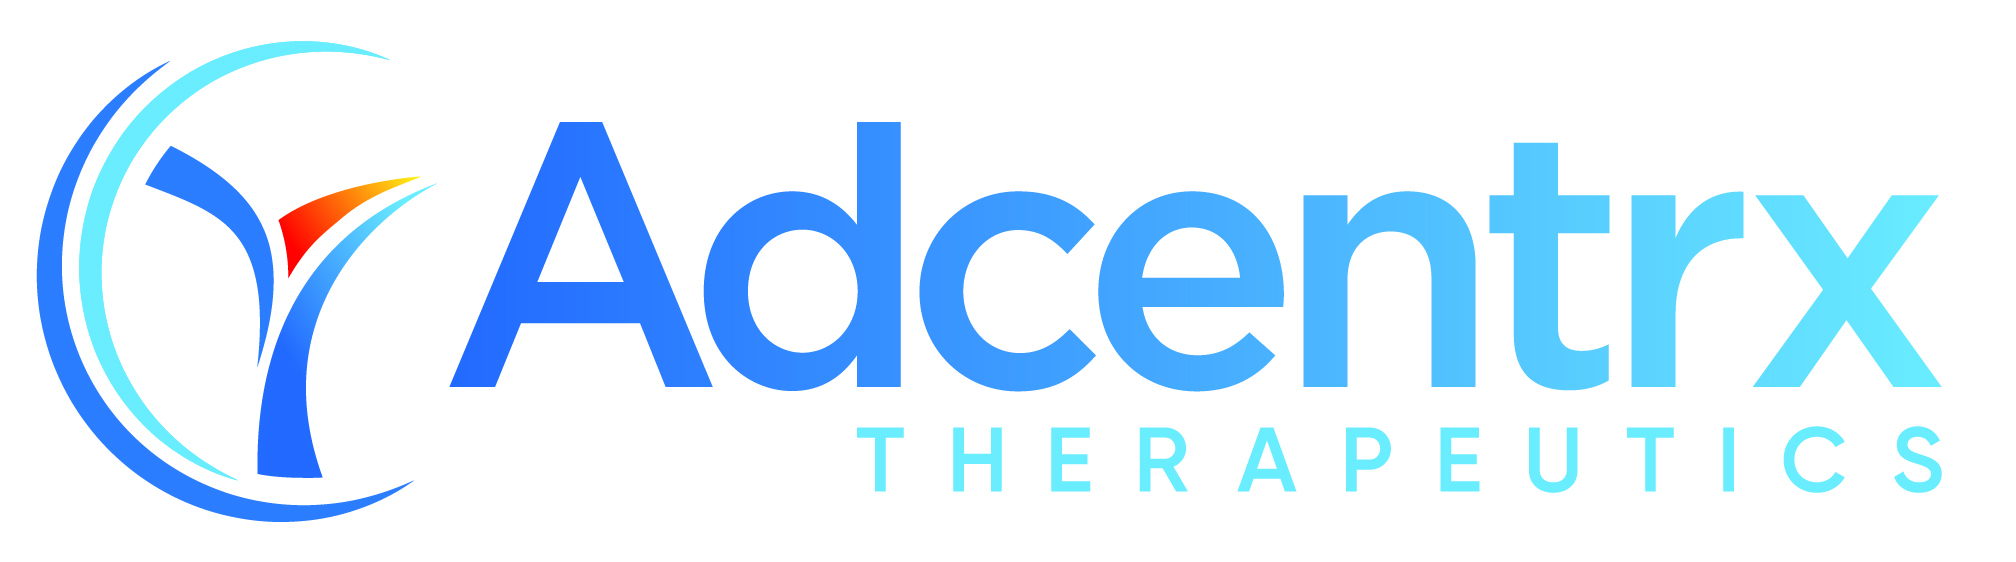 Adcentrx Logo (PRNewsfoto/Adcentrx Therapeutics)